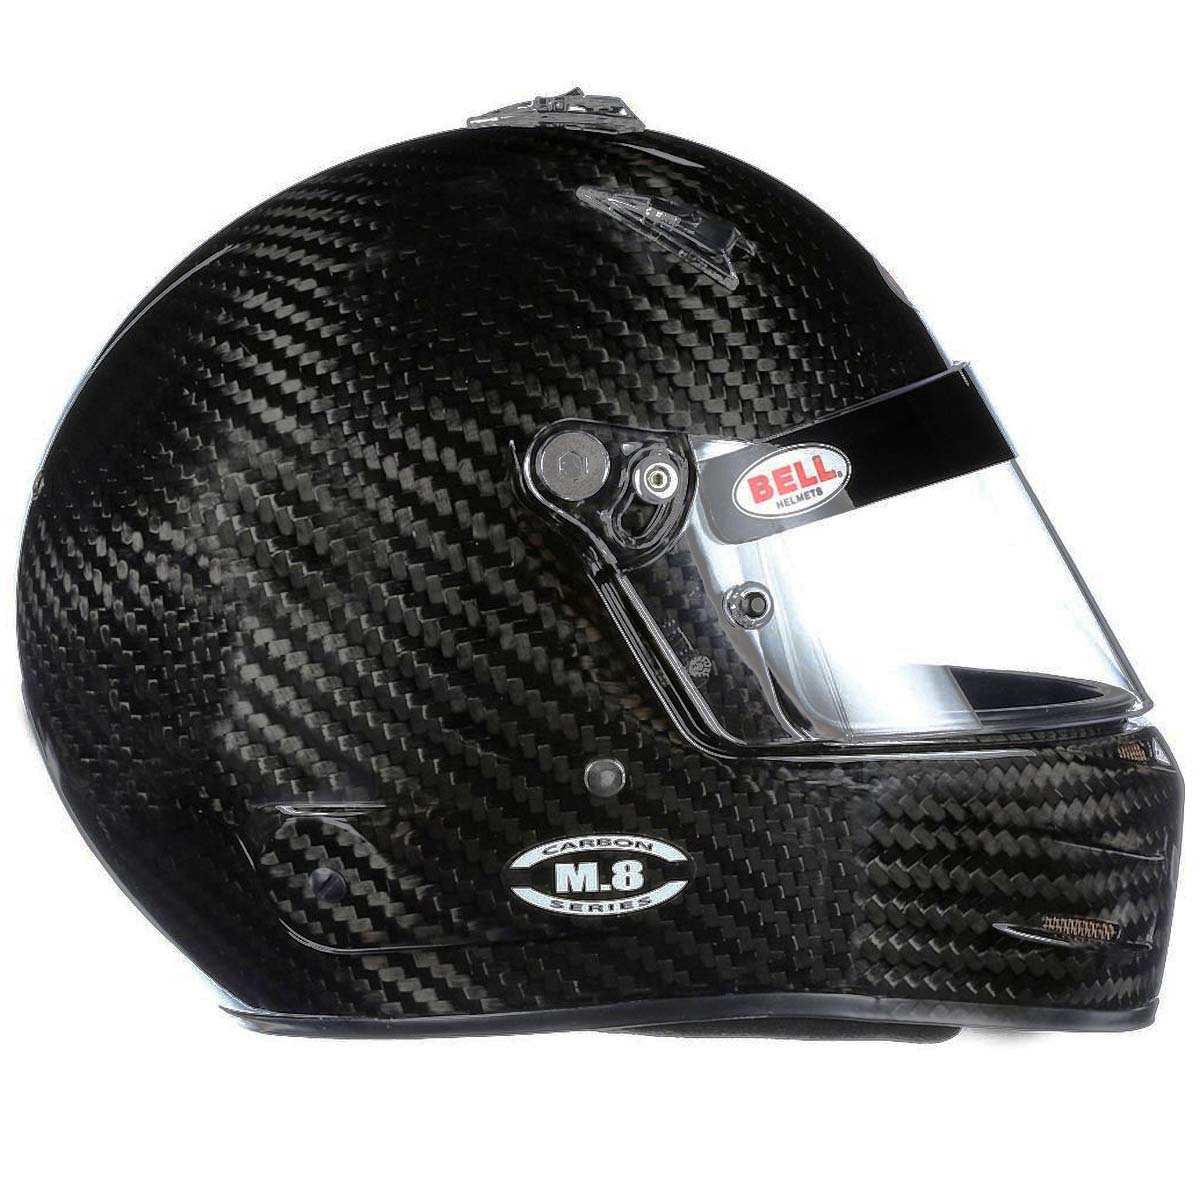 Stunning Bell M.8 Carbon Fiber Helmet SA2020 Image Gallery